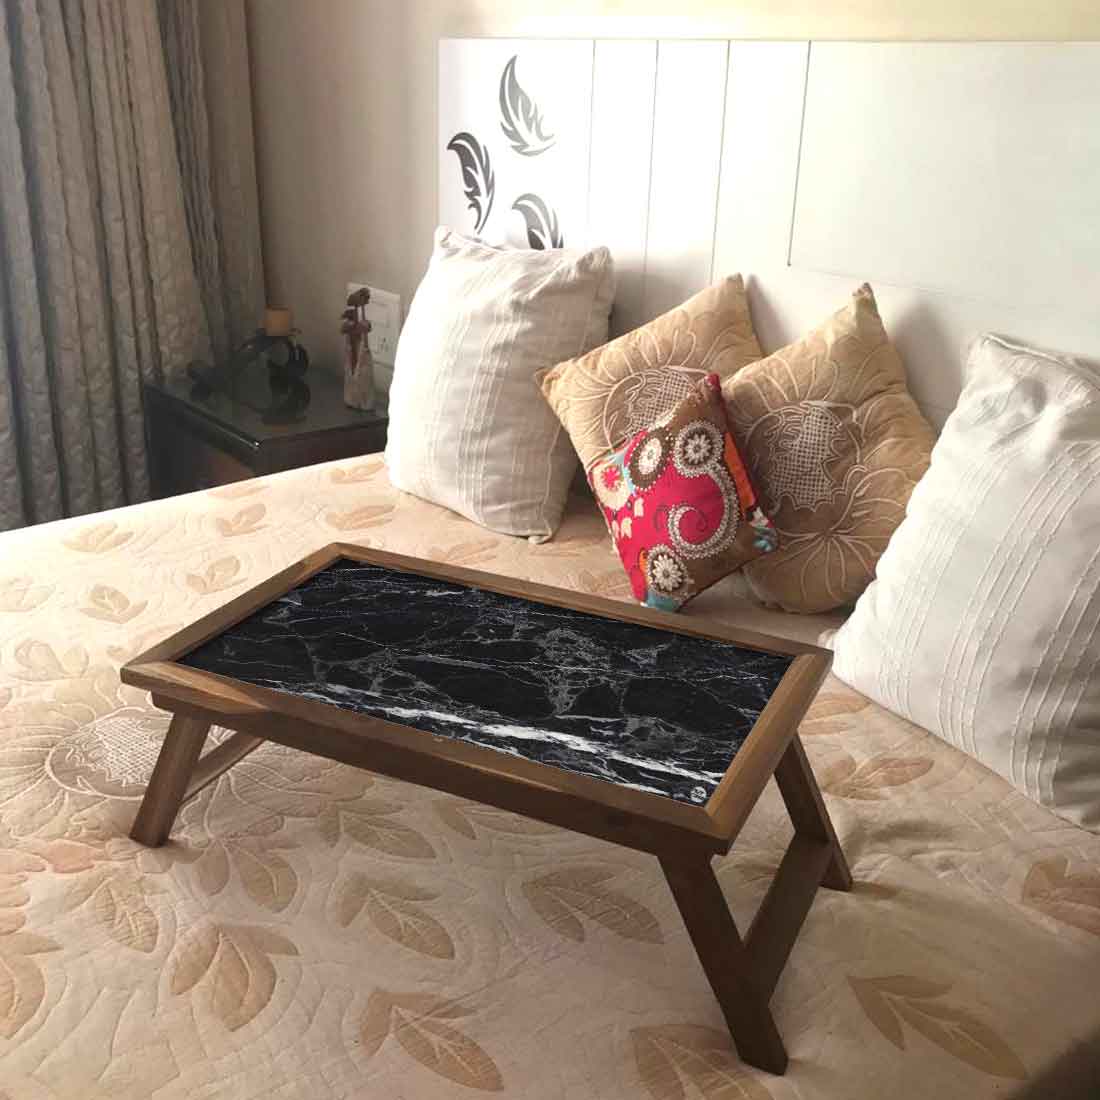 Nutcase Designer Bed Breakfast Tray Table Wooden Study Desk - Digital Print NOT Real Marble -Black Marble Effect Nutcase